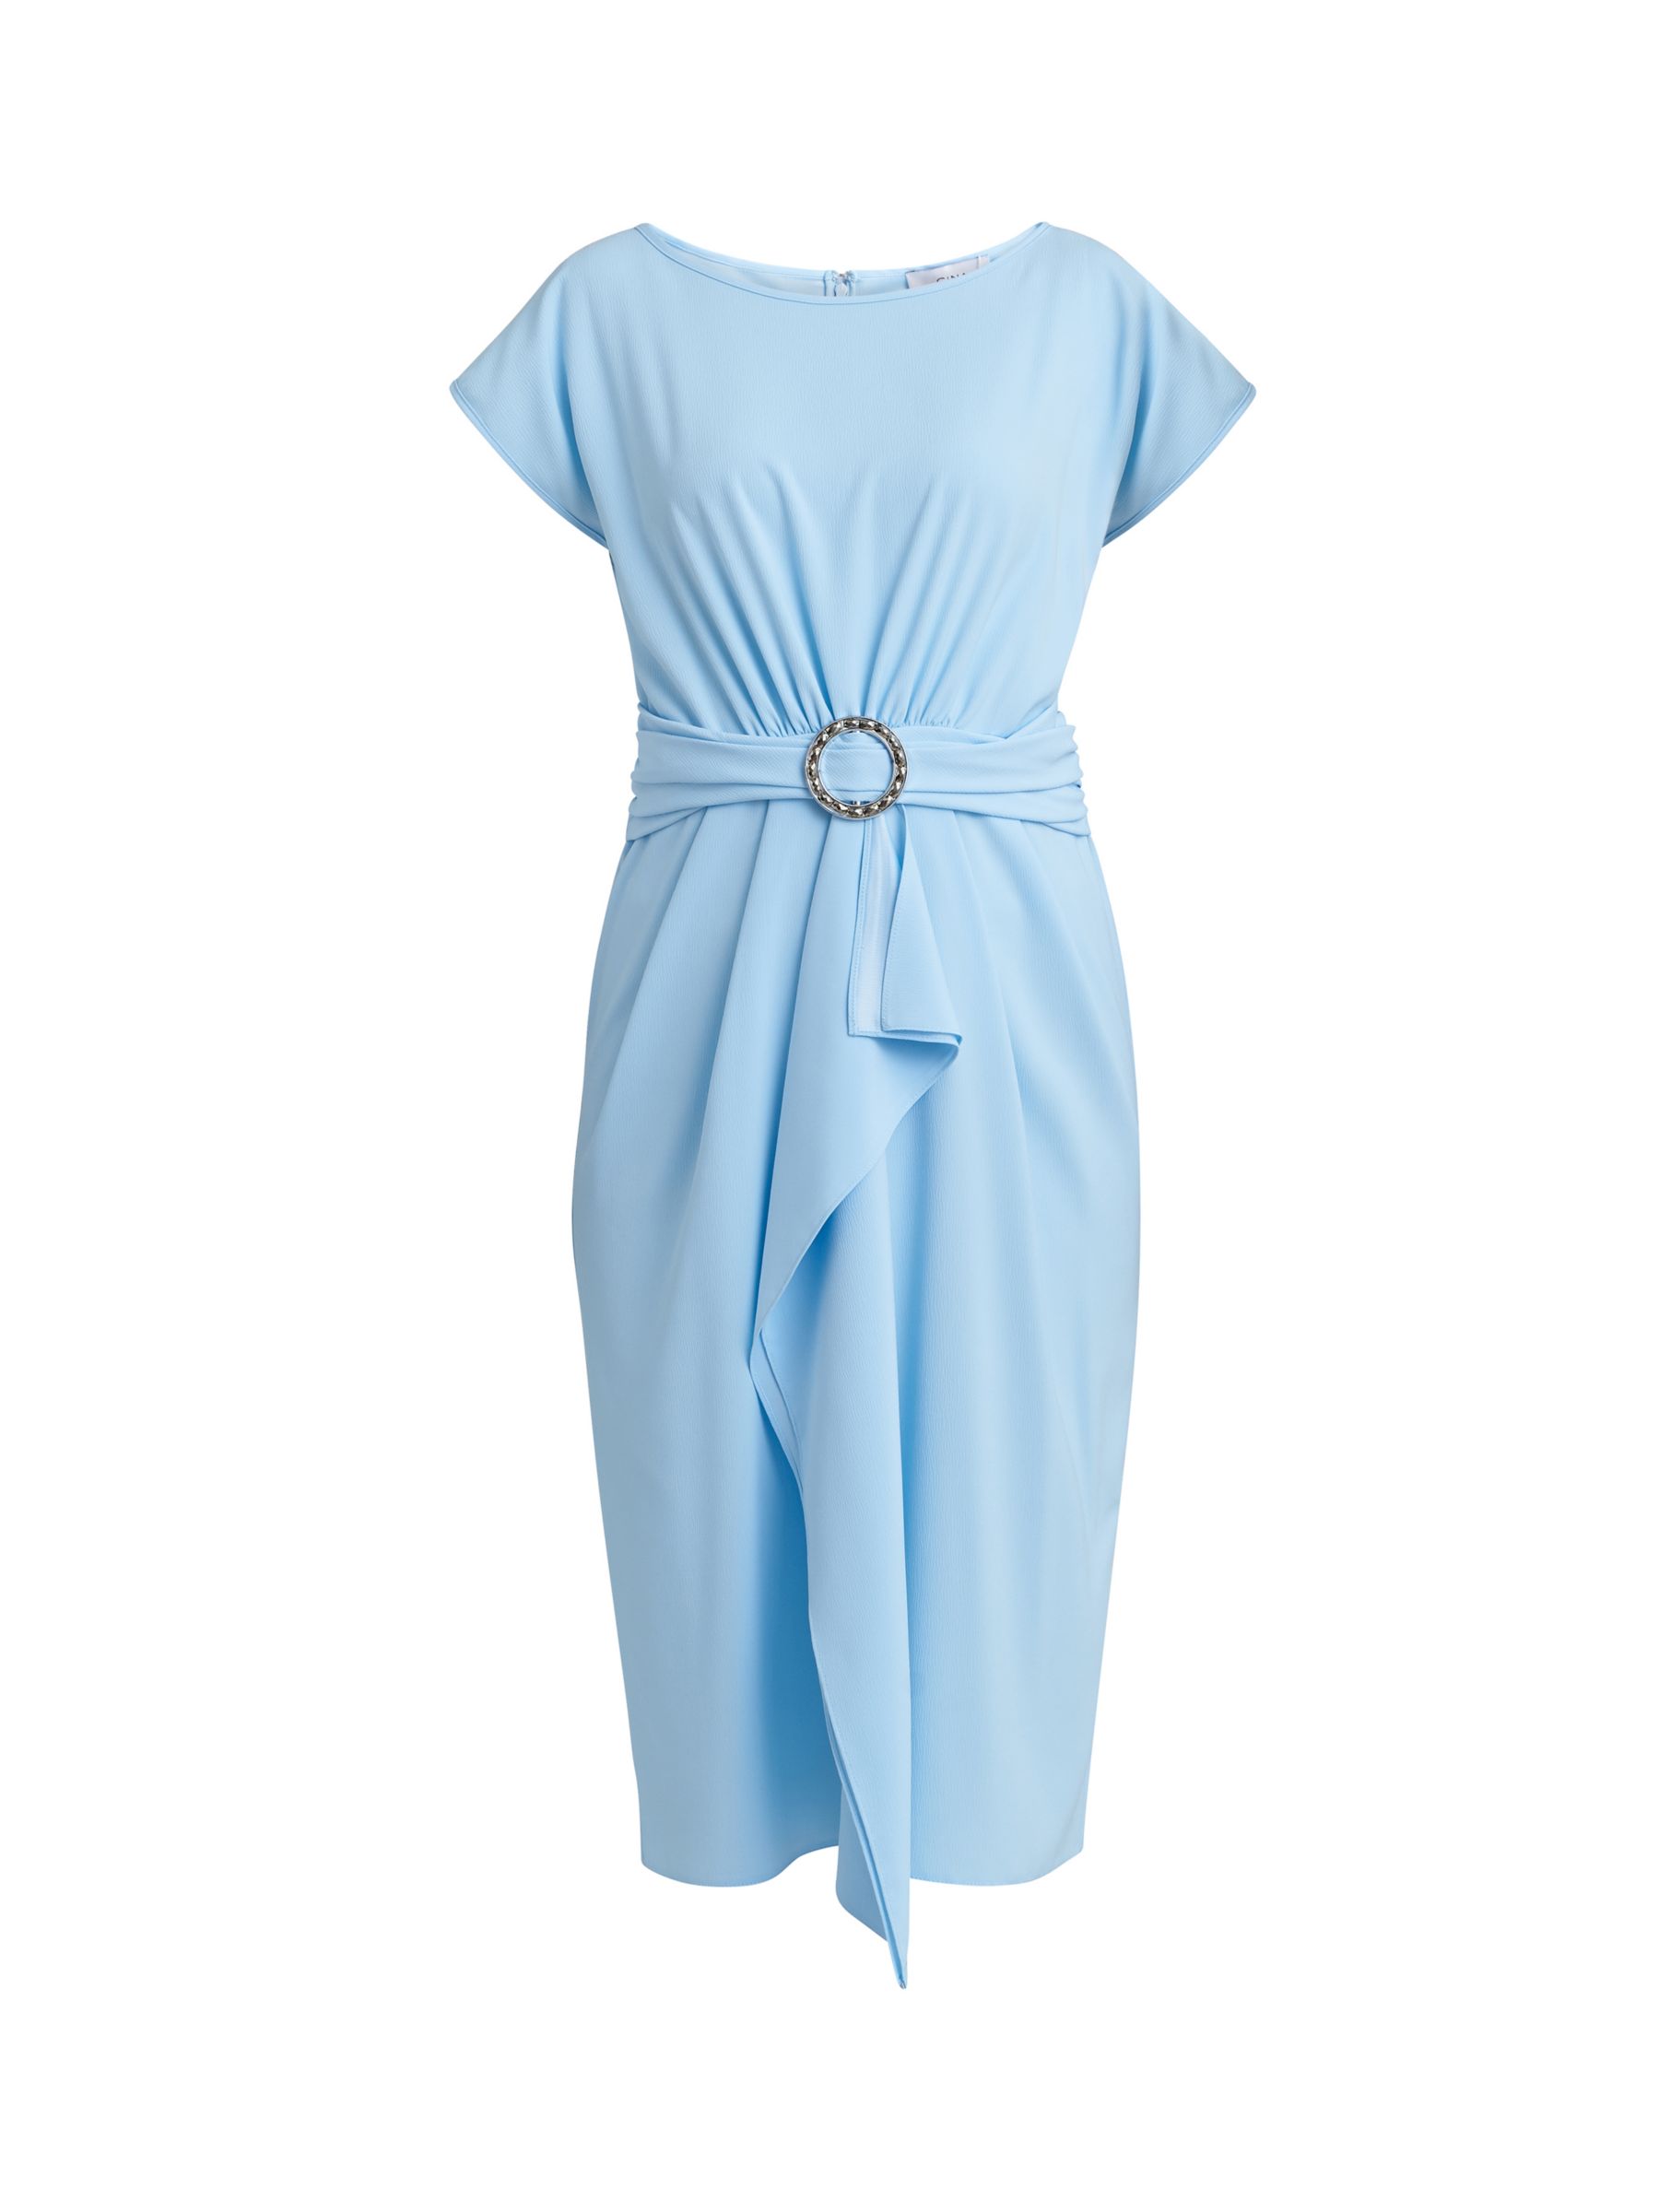 Gina Bacconi Pelia Diamante Buckle Crepe Midi Dress, Blue, 8